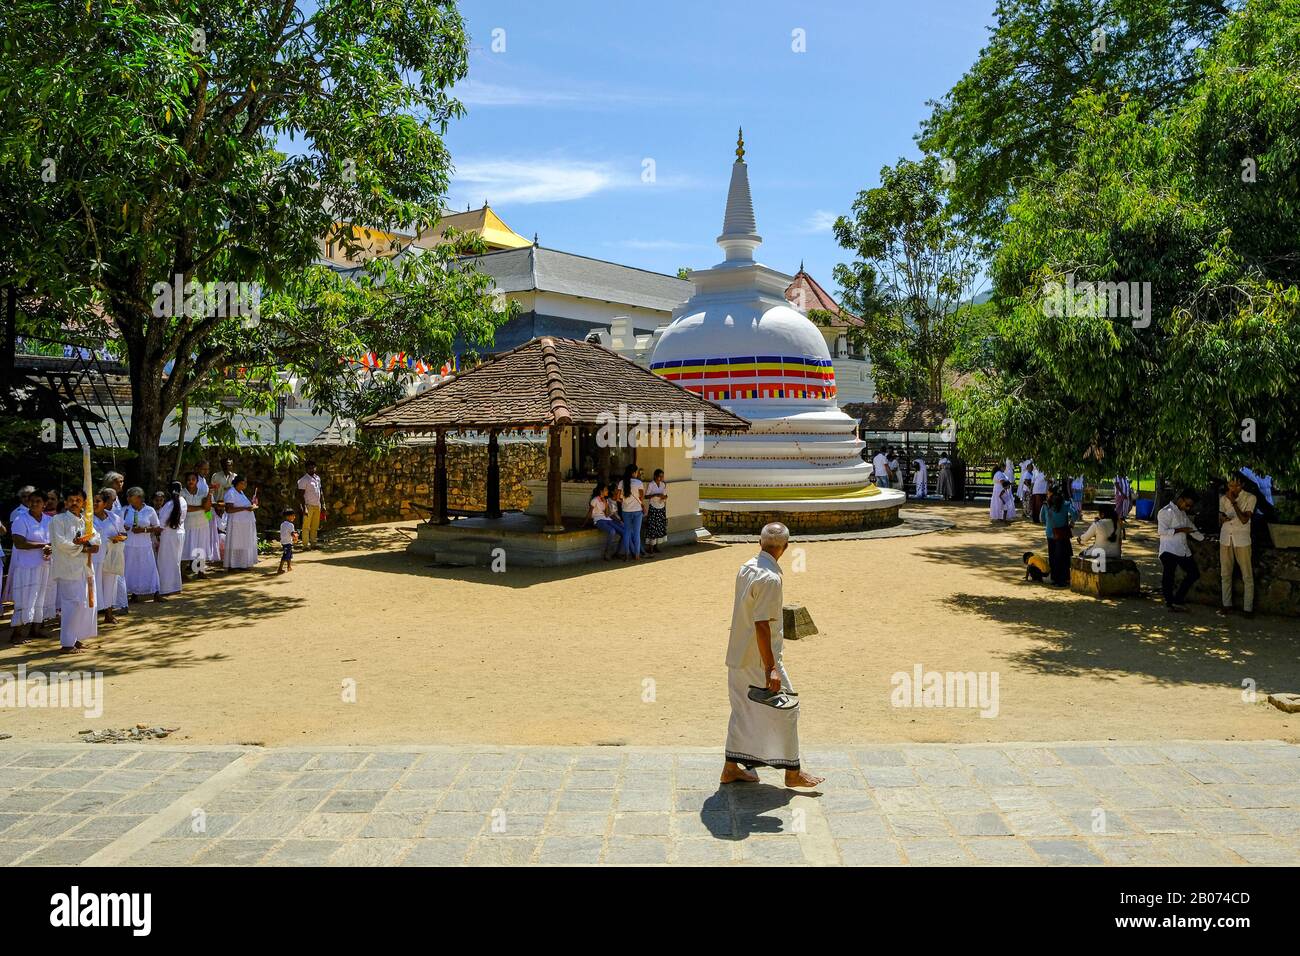 Kandy, Sri Lanka - Gennaio 2020: Persone che visitano il Tempio Buddista Natha Devale il 26 gennaio 2020 a Kandy, Sri Lanka. Foto Stock